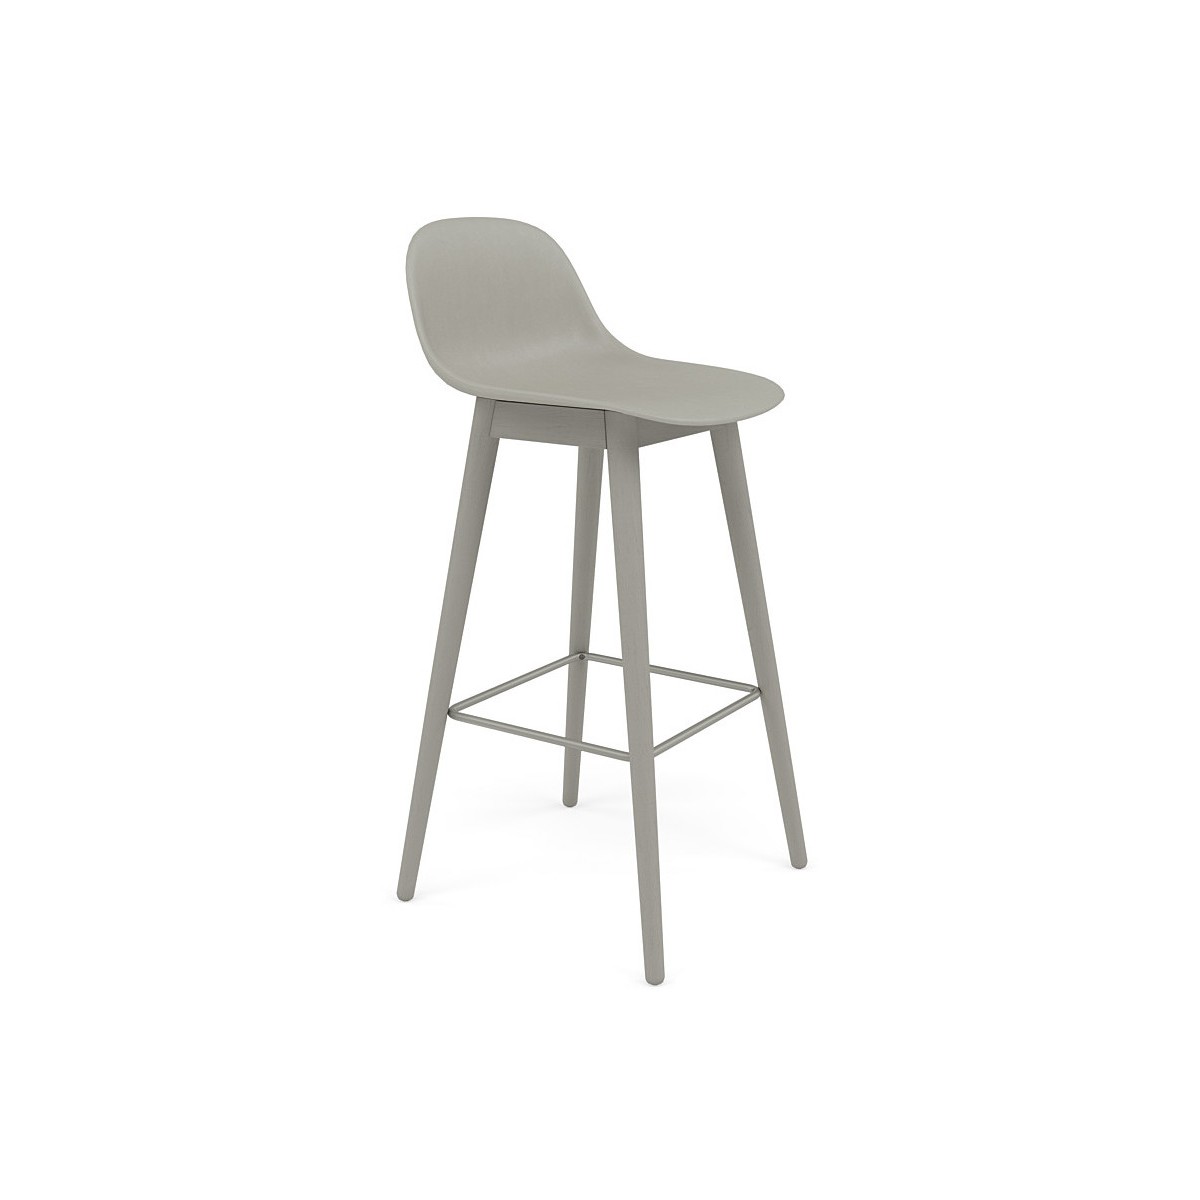 grey / grey - Fiber bar stool wooden base with backrest